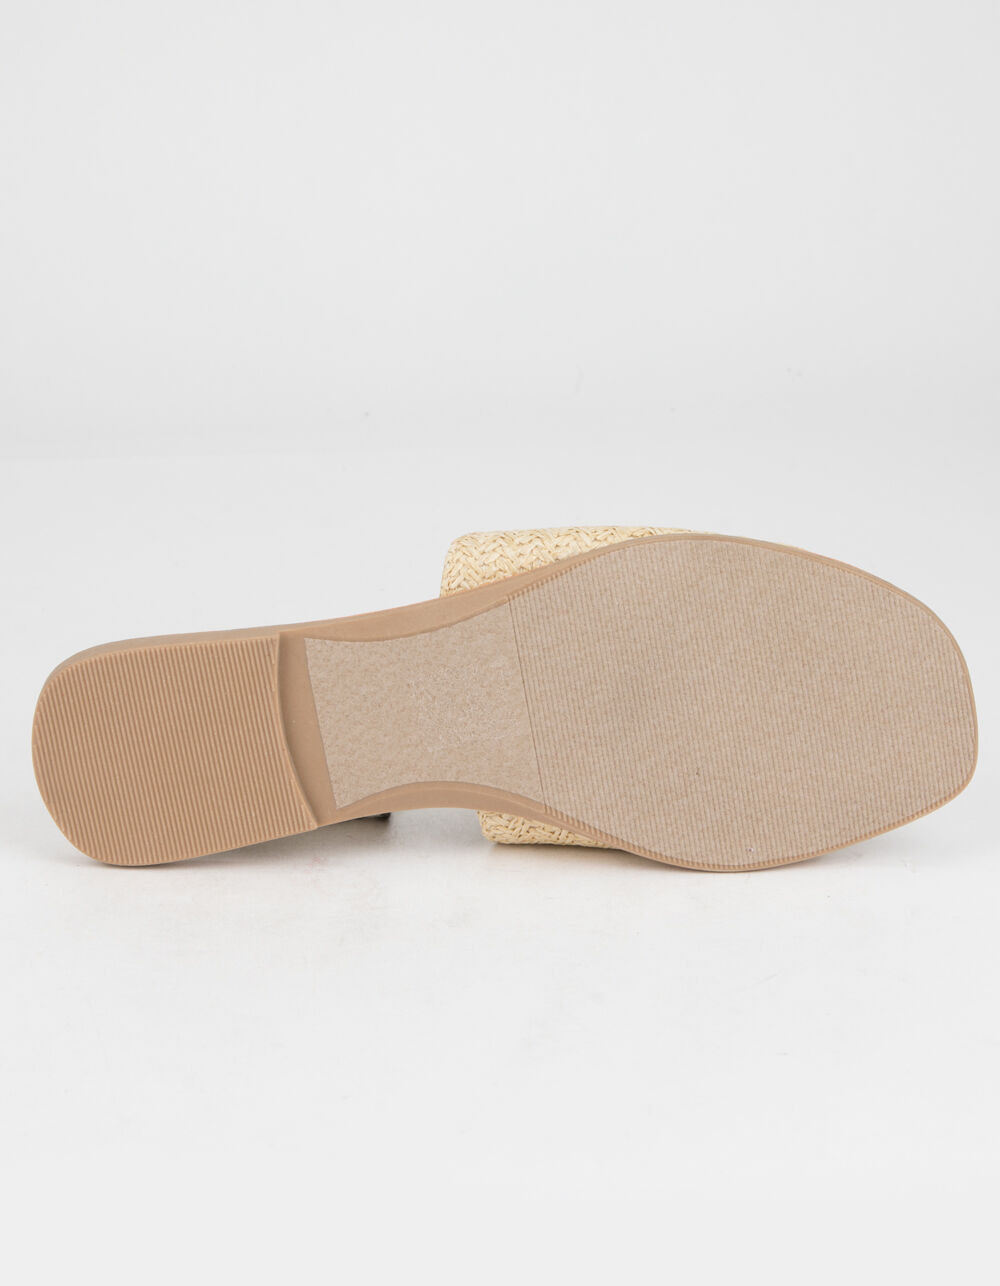 SODA Raffia Womens Sandals - NATURAL | Tillys